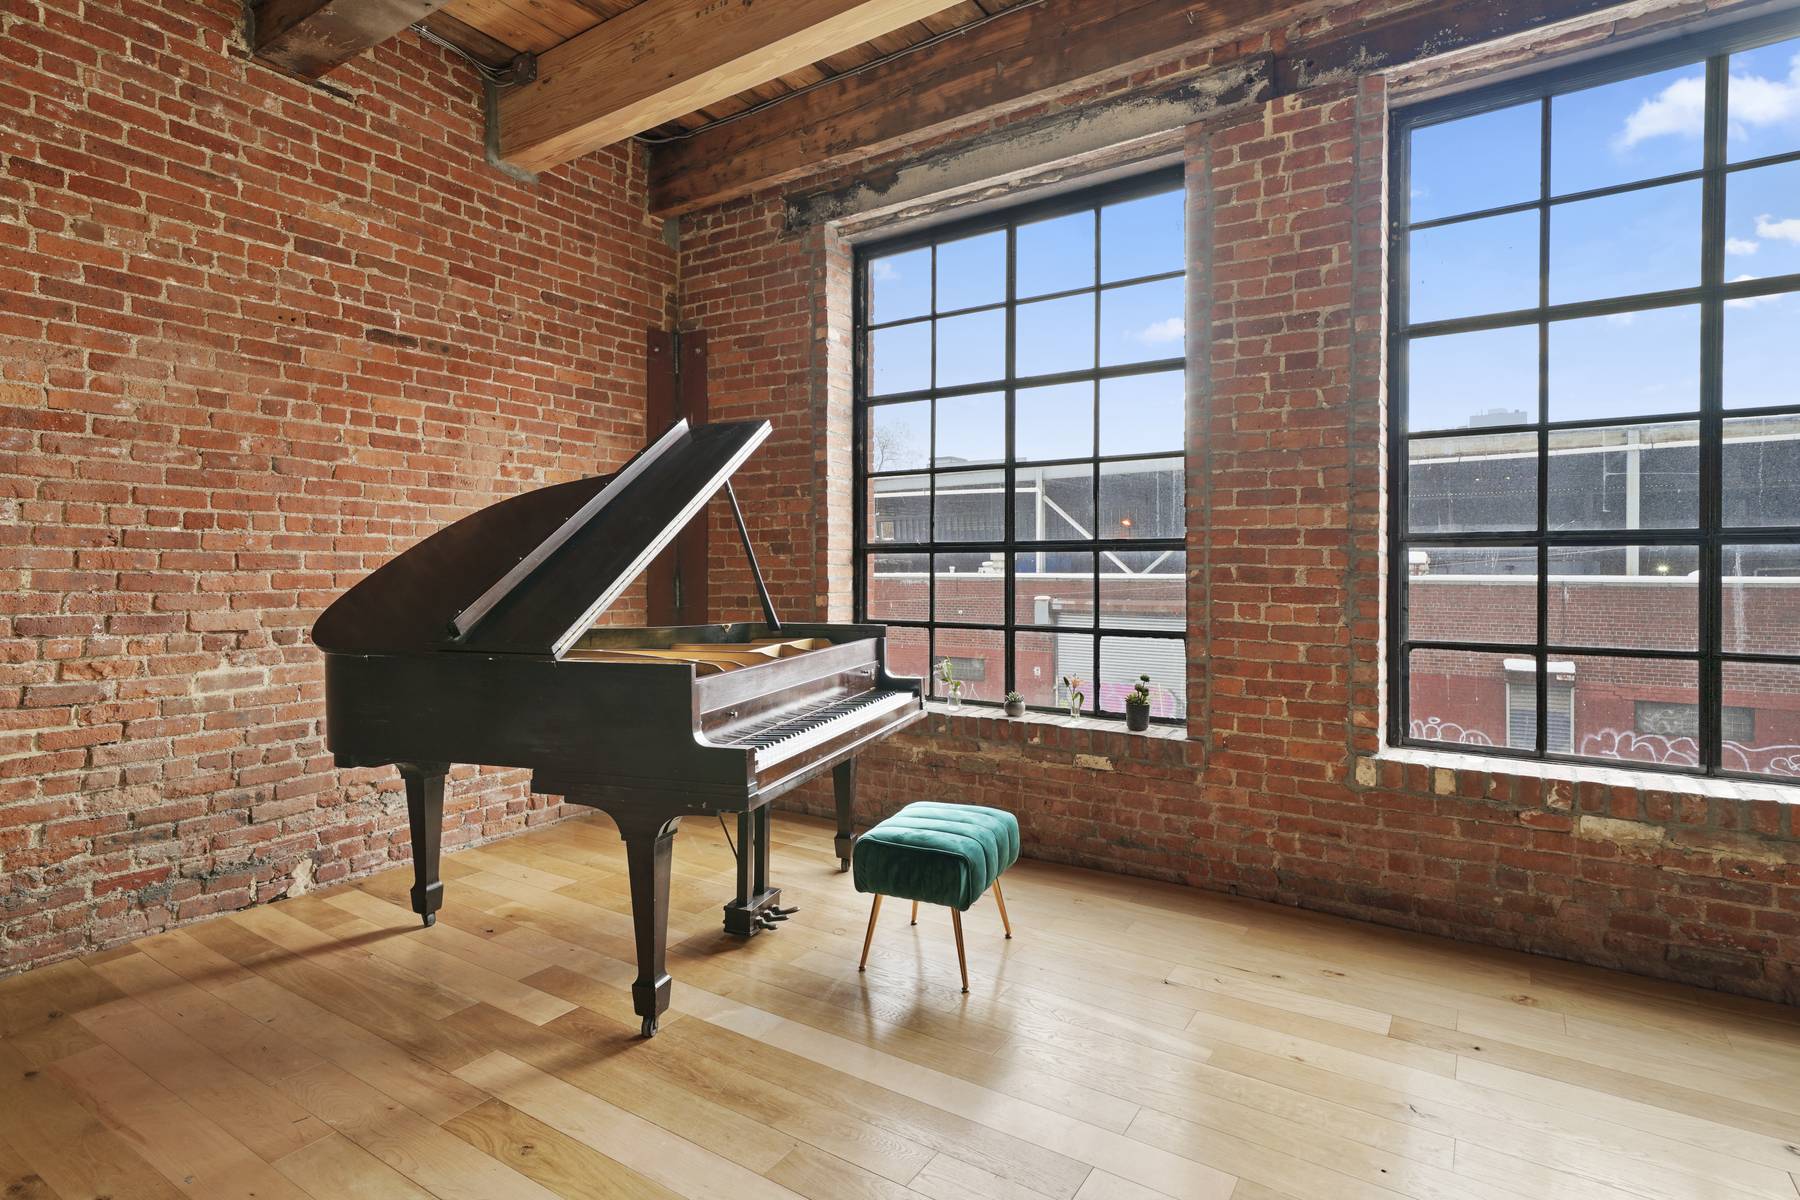 grand piano in a brick wall photo studio with a big window